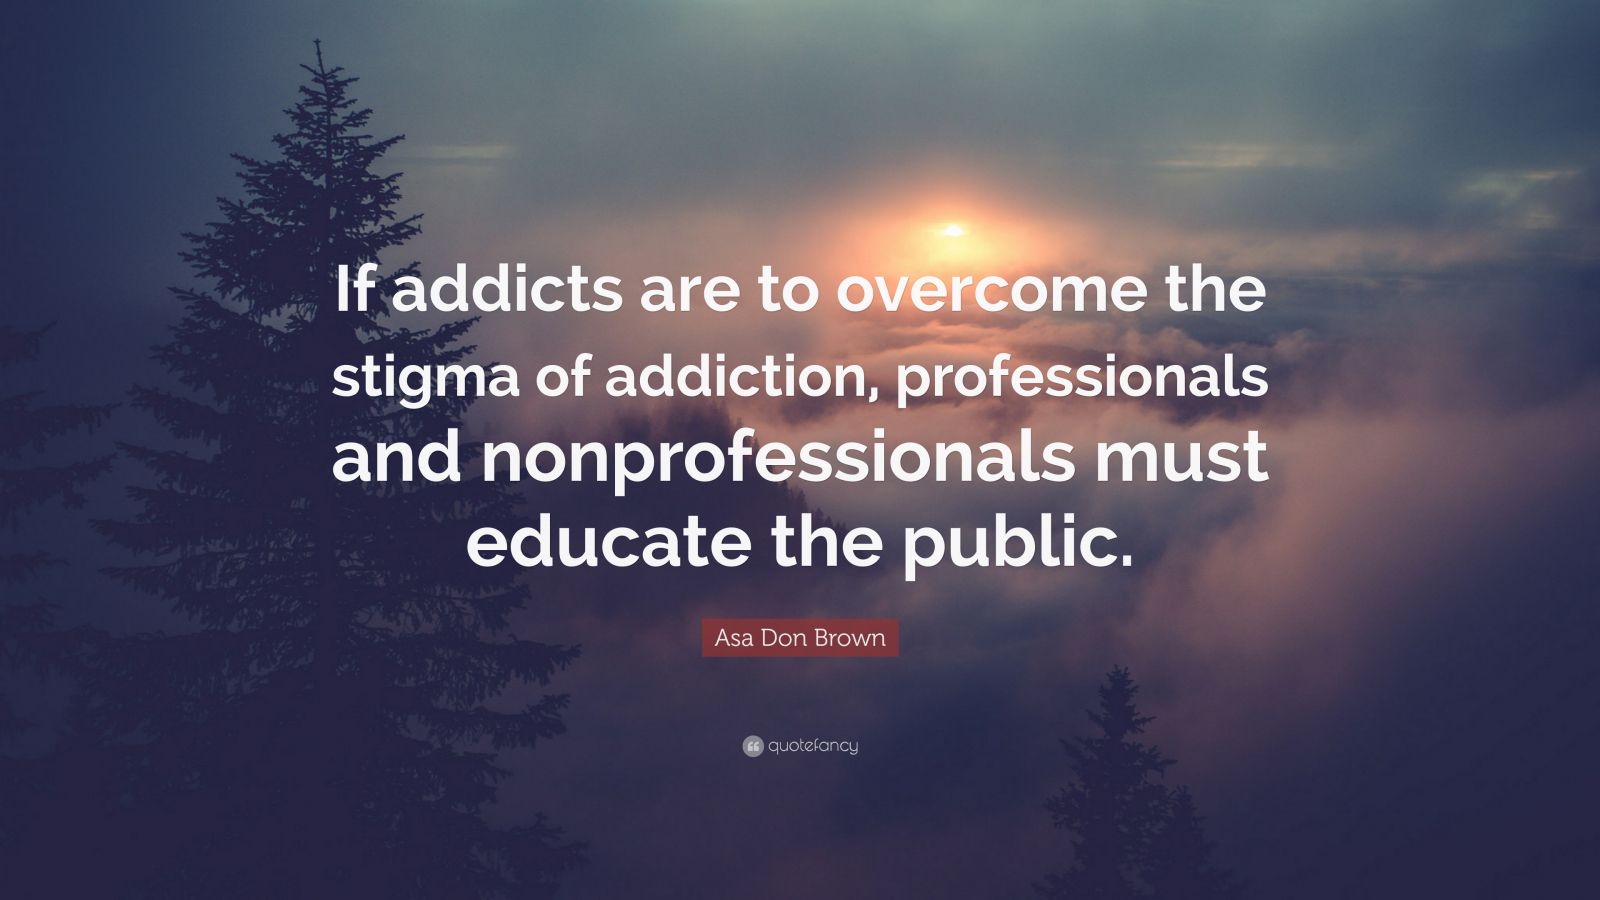 Asa Don Brown Quote: “If addicts are to overcome the stigma of